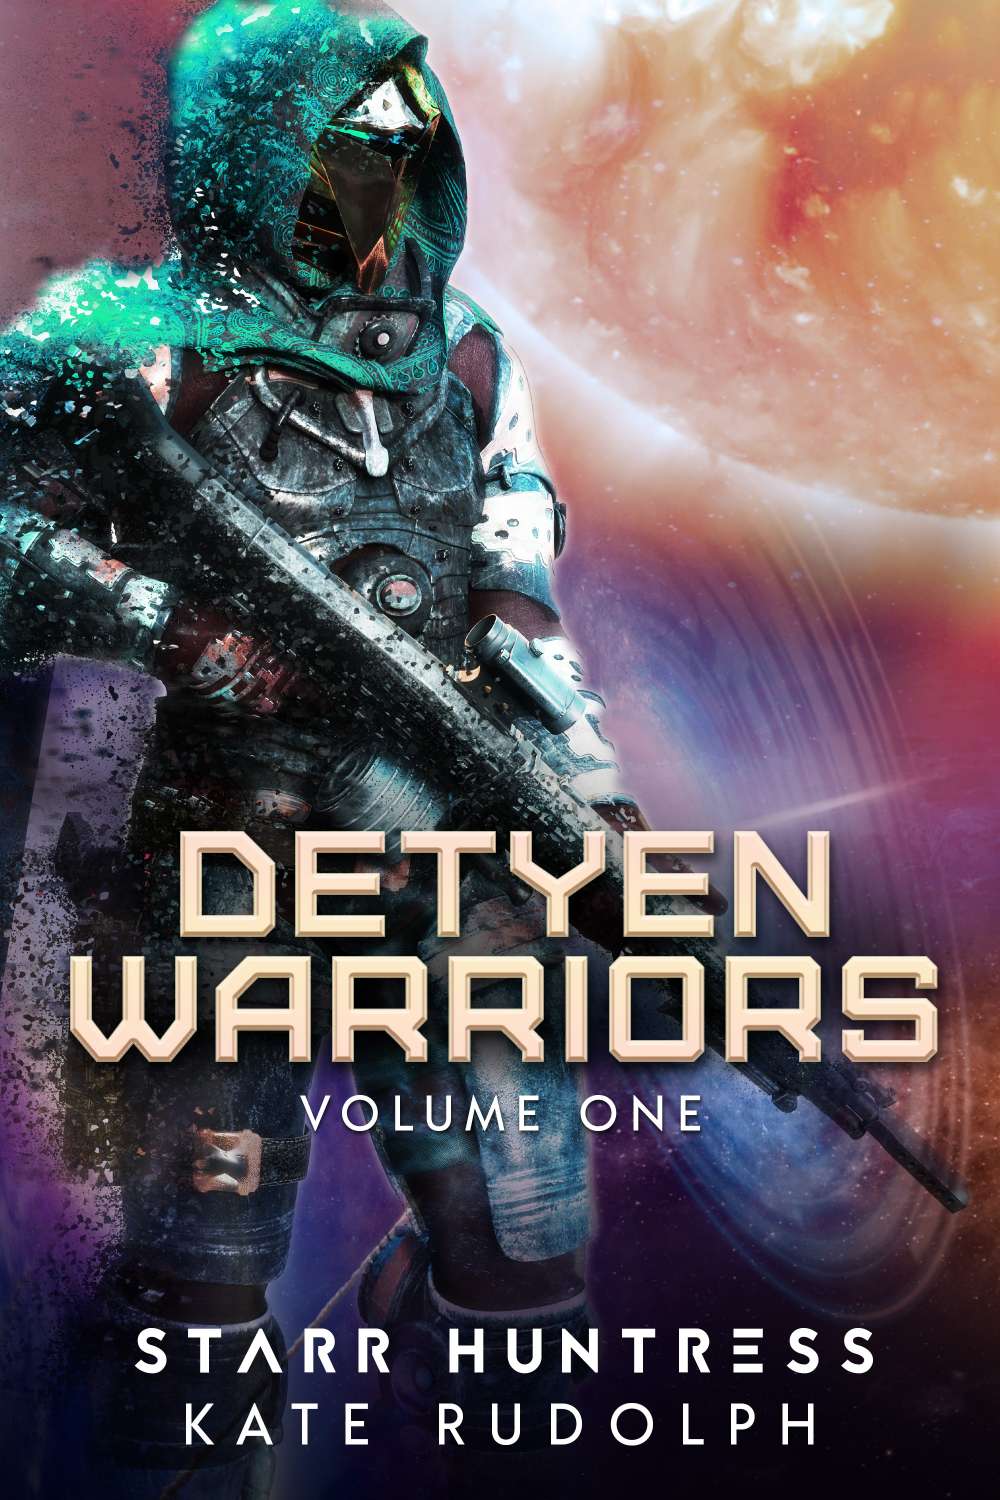 Detyen Warriors Volume One